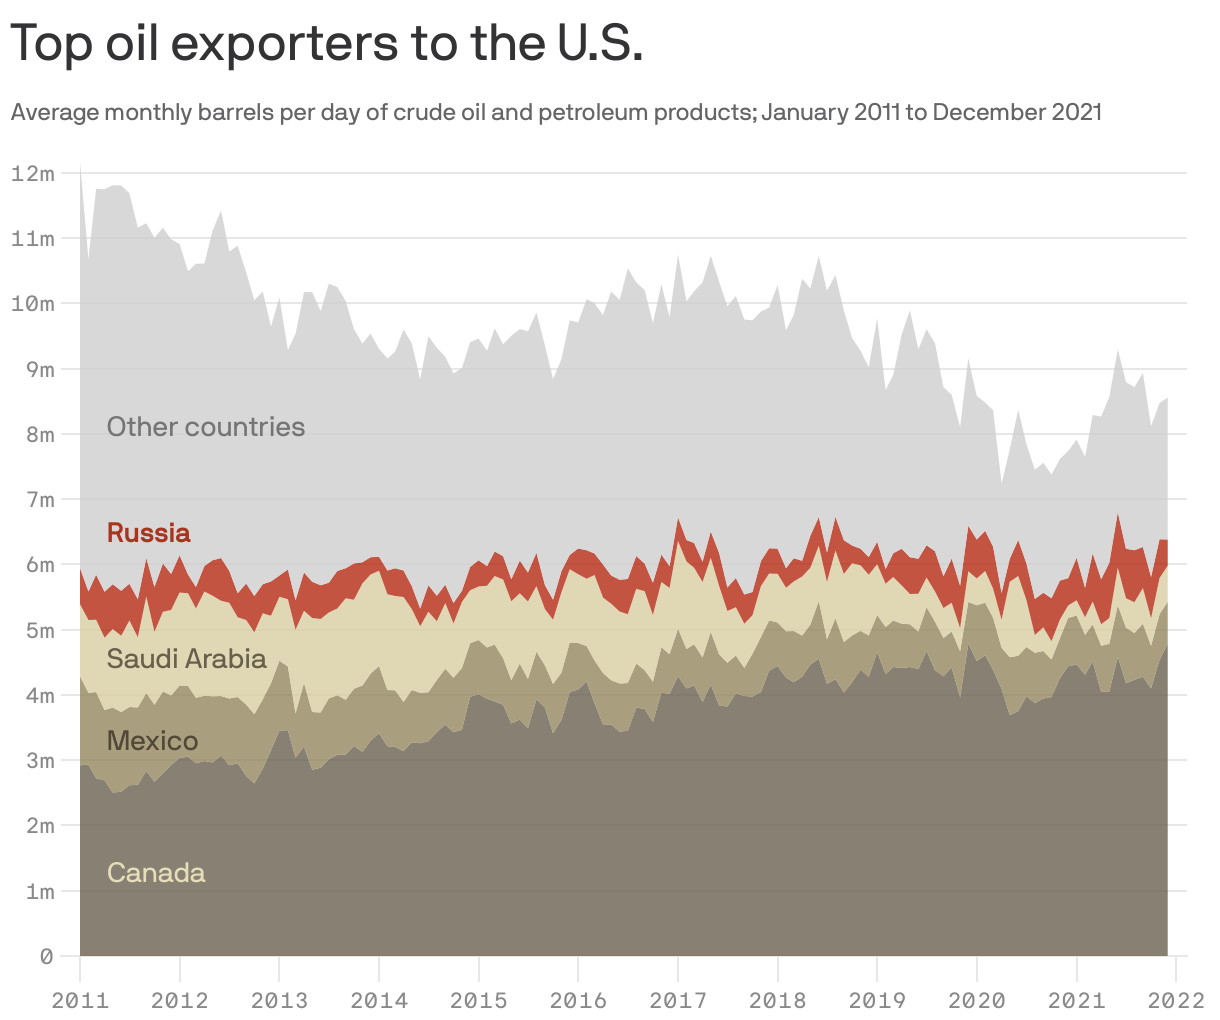 Top oil exporters to the U.S.